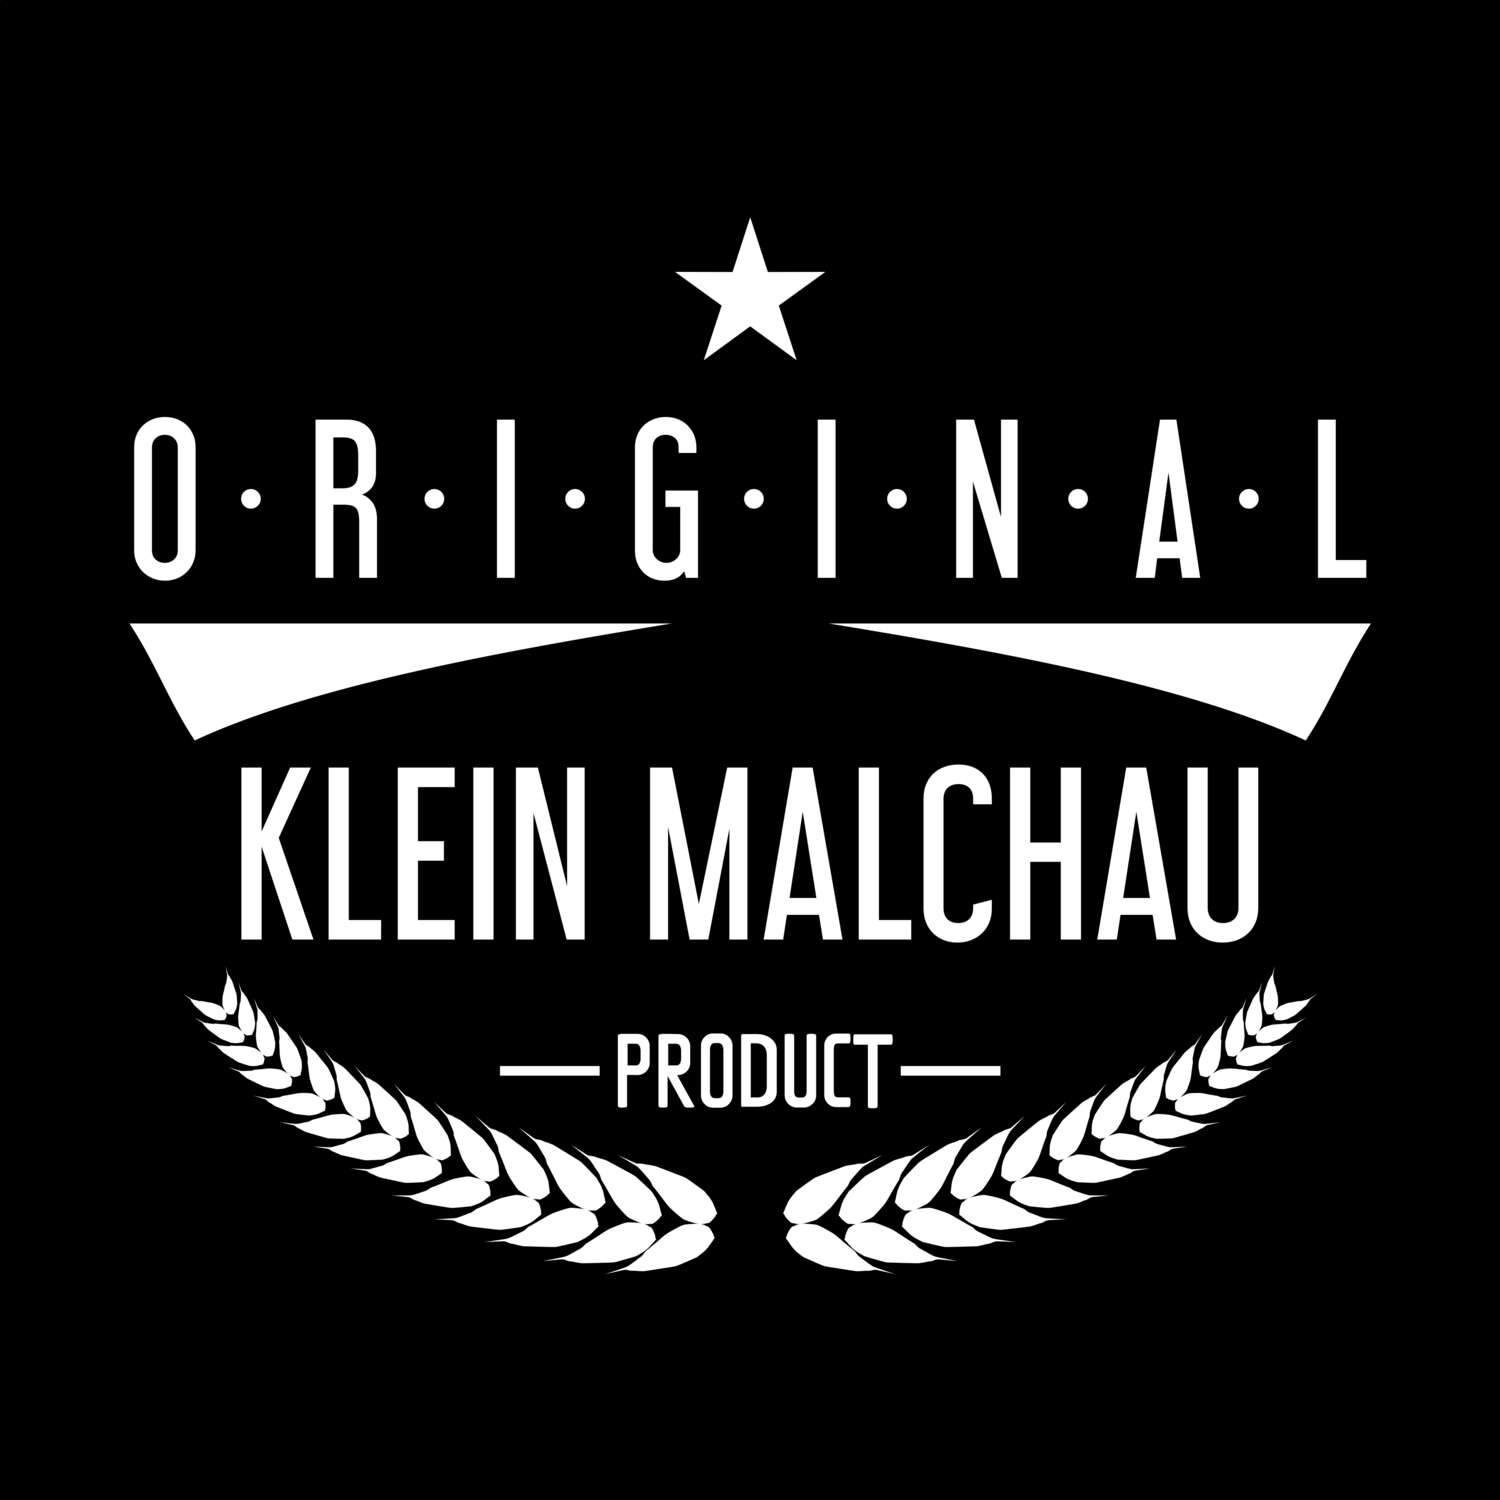 Klein Malchau T-Shirt »Original Product«